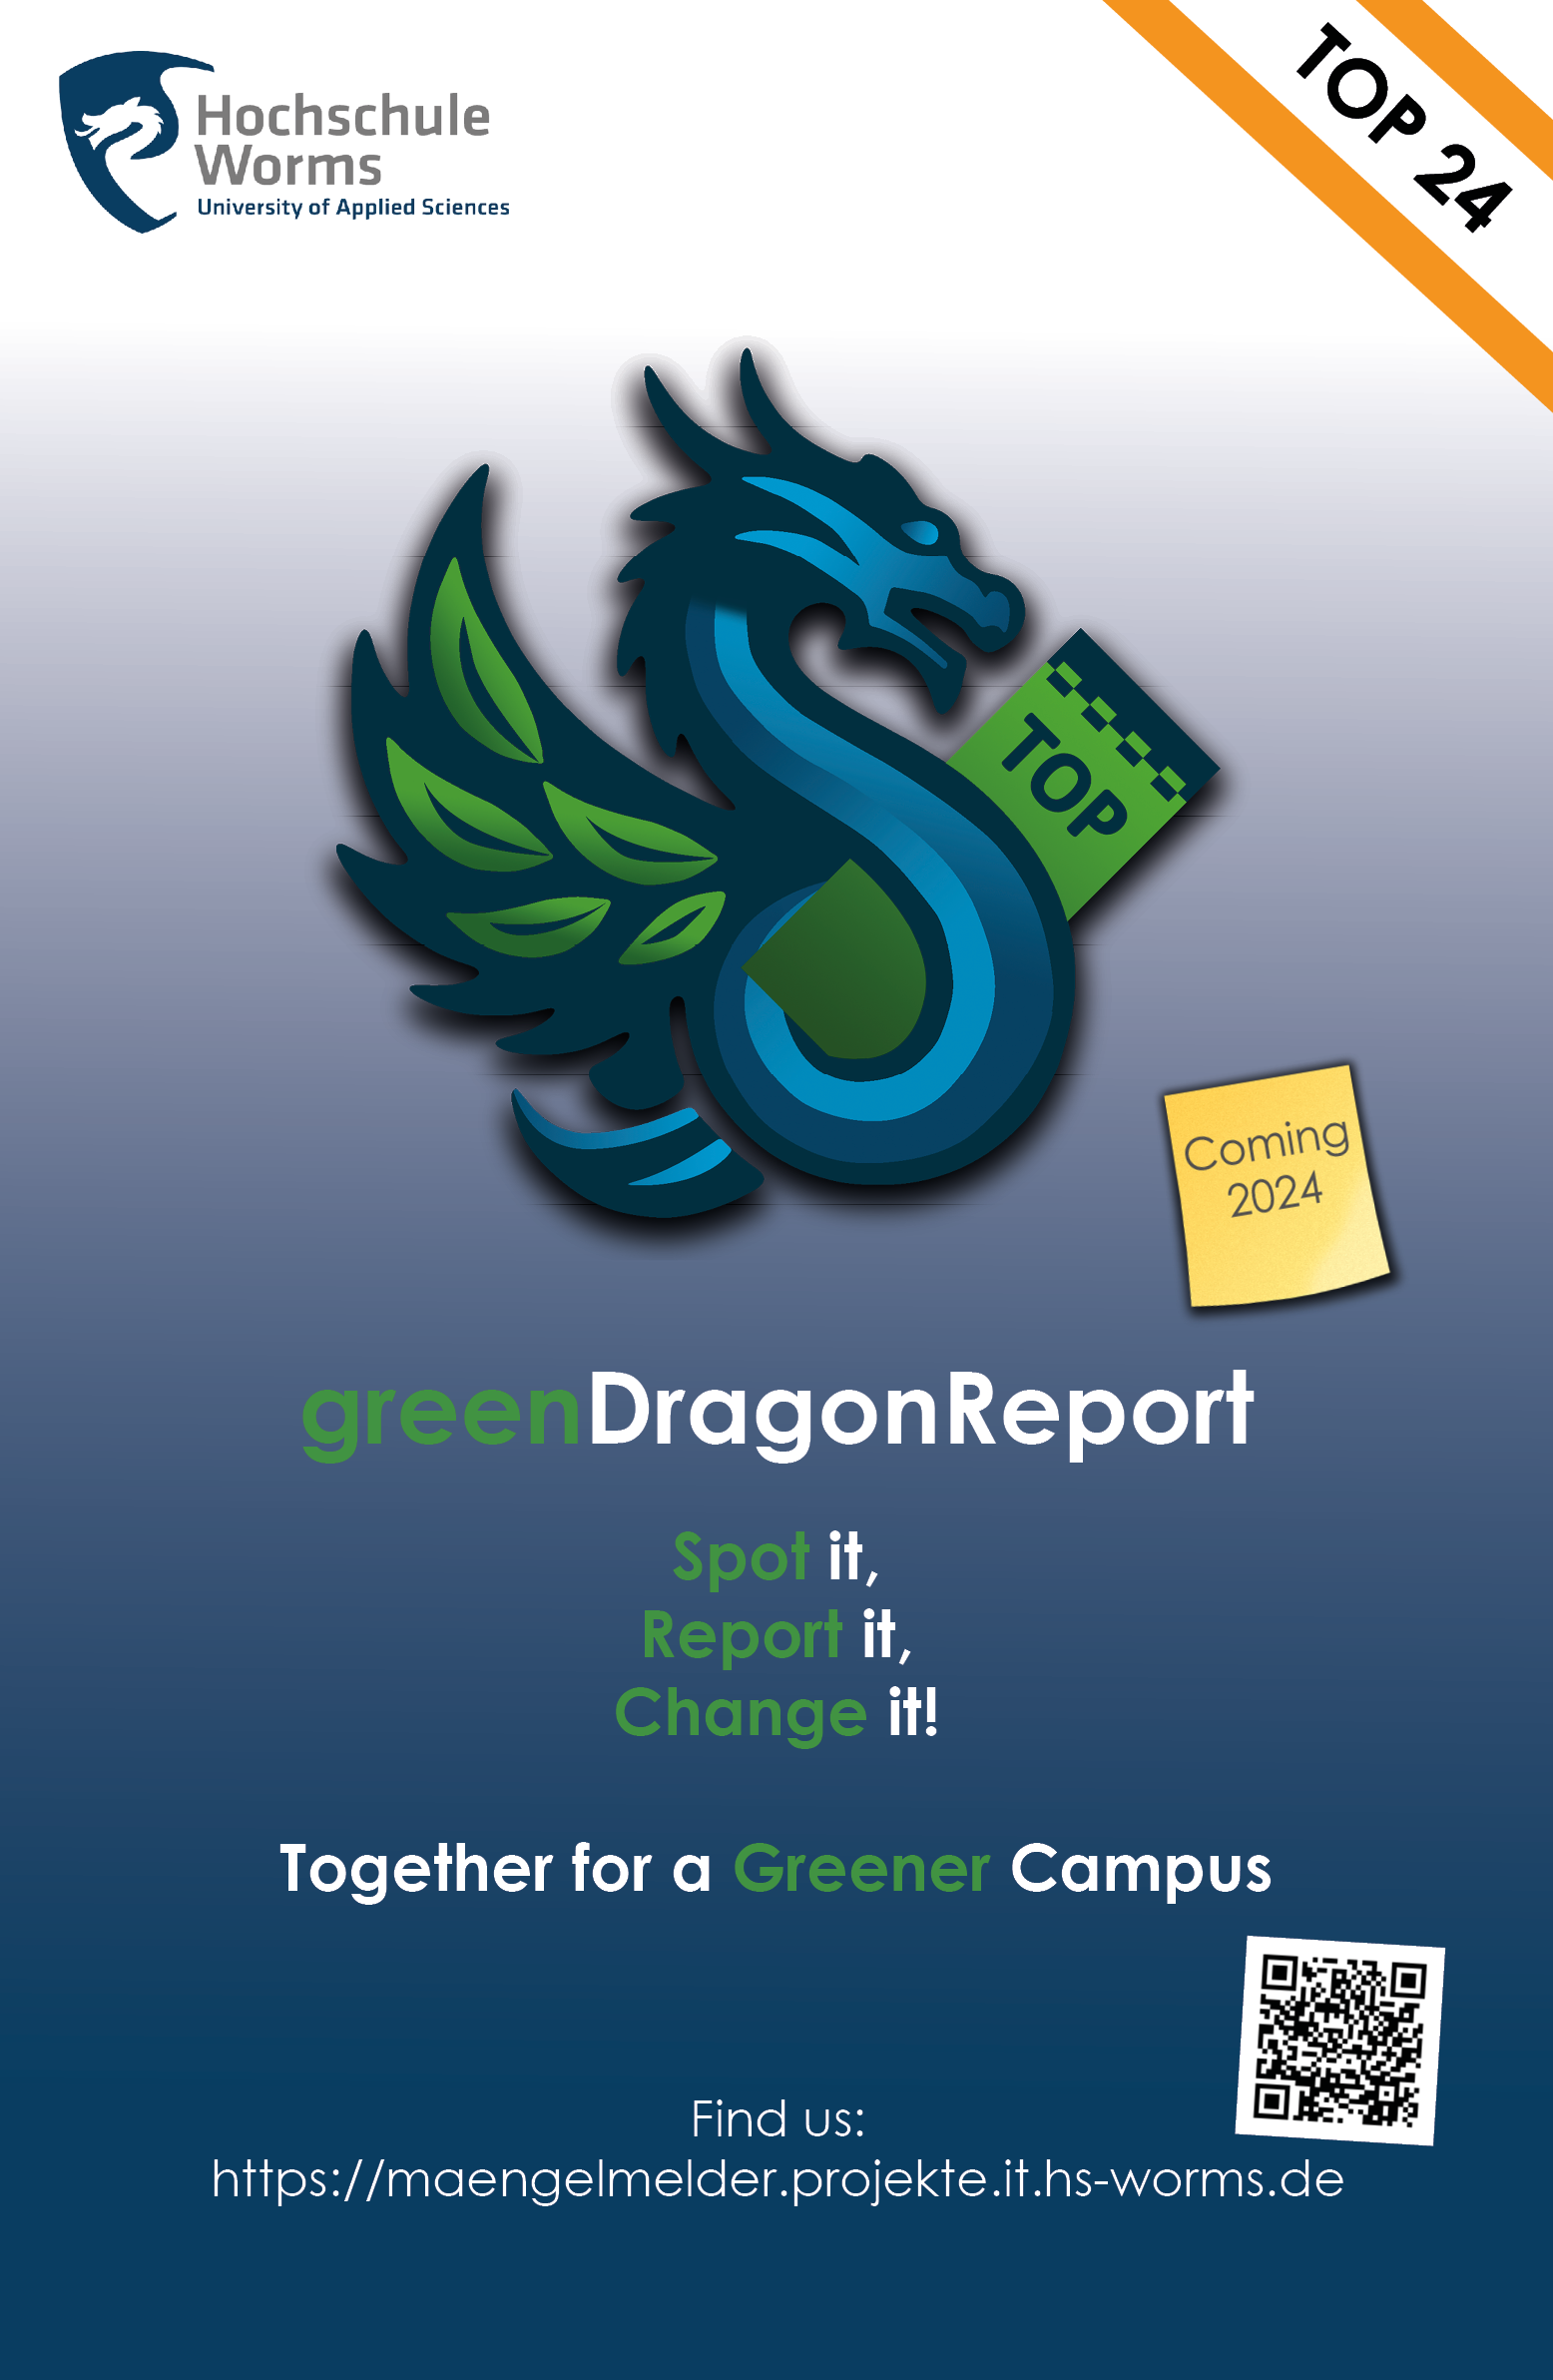 Plakat mit greenDragonReport Logo